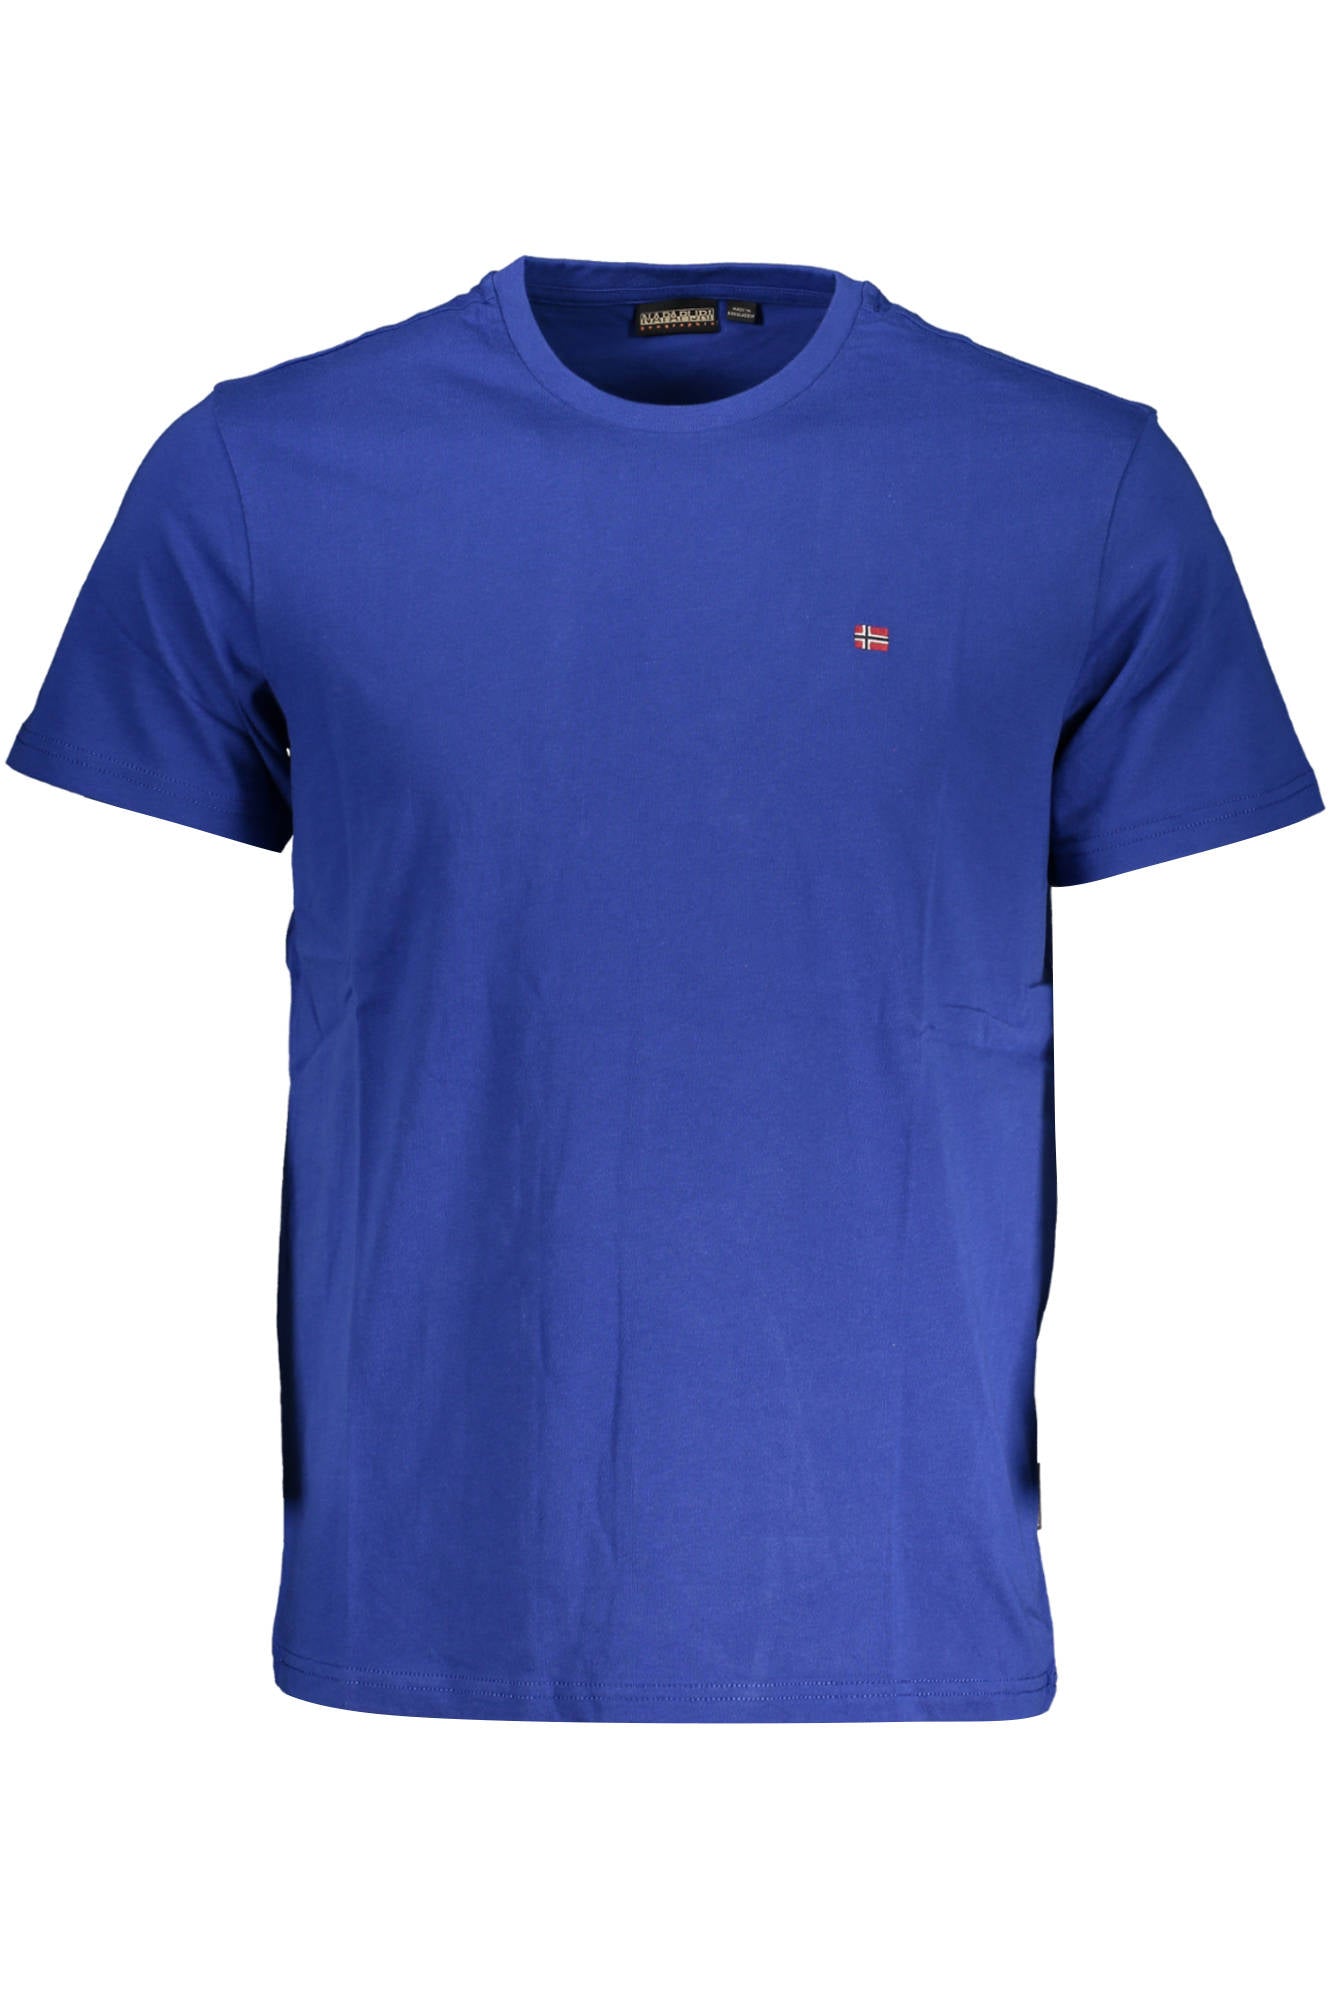 Napapijri Blue Cotton T-Shirt - Fizigo